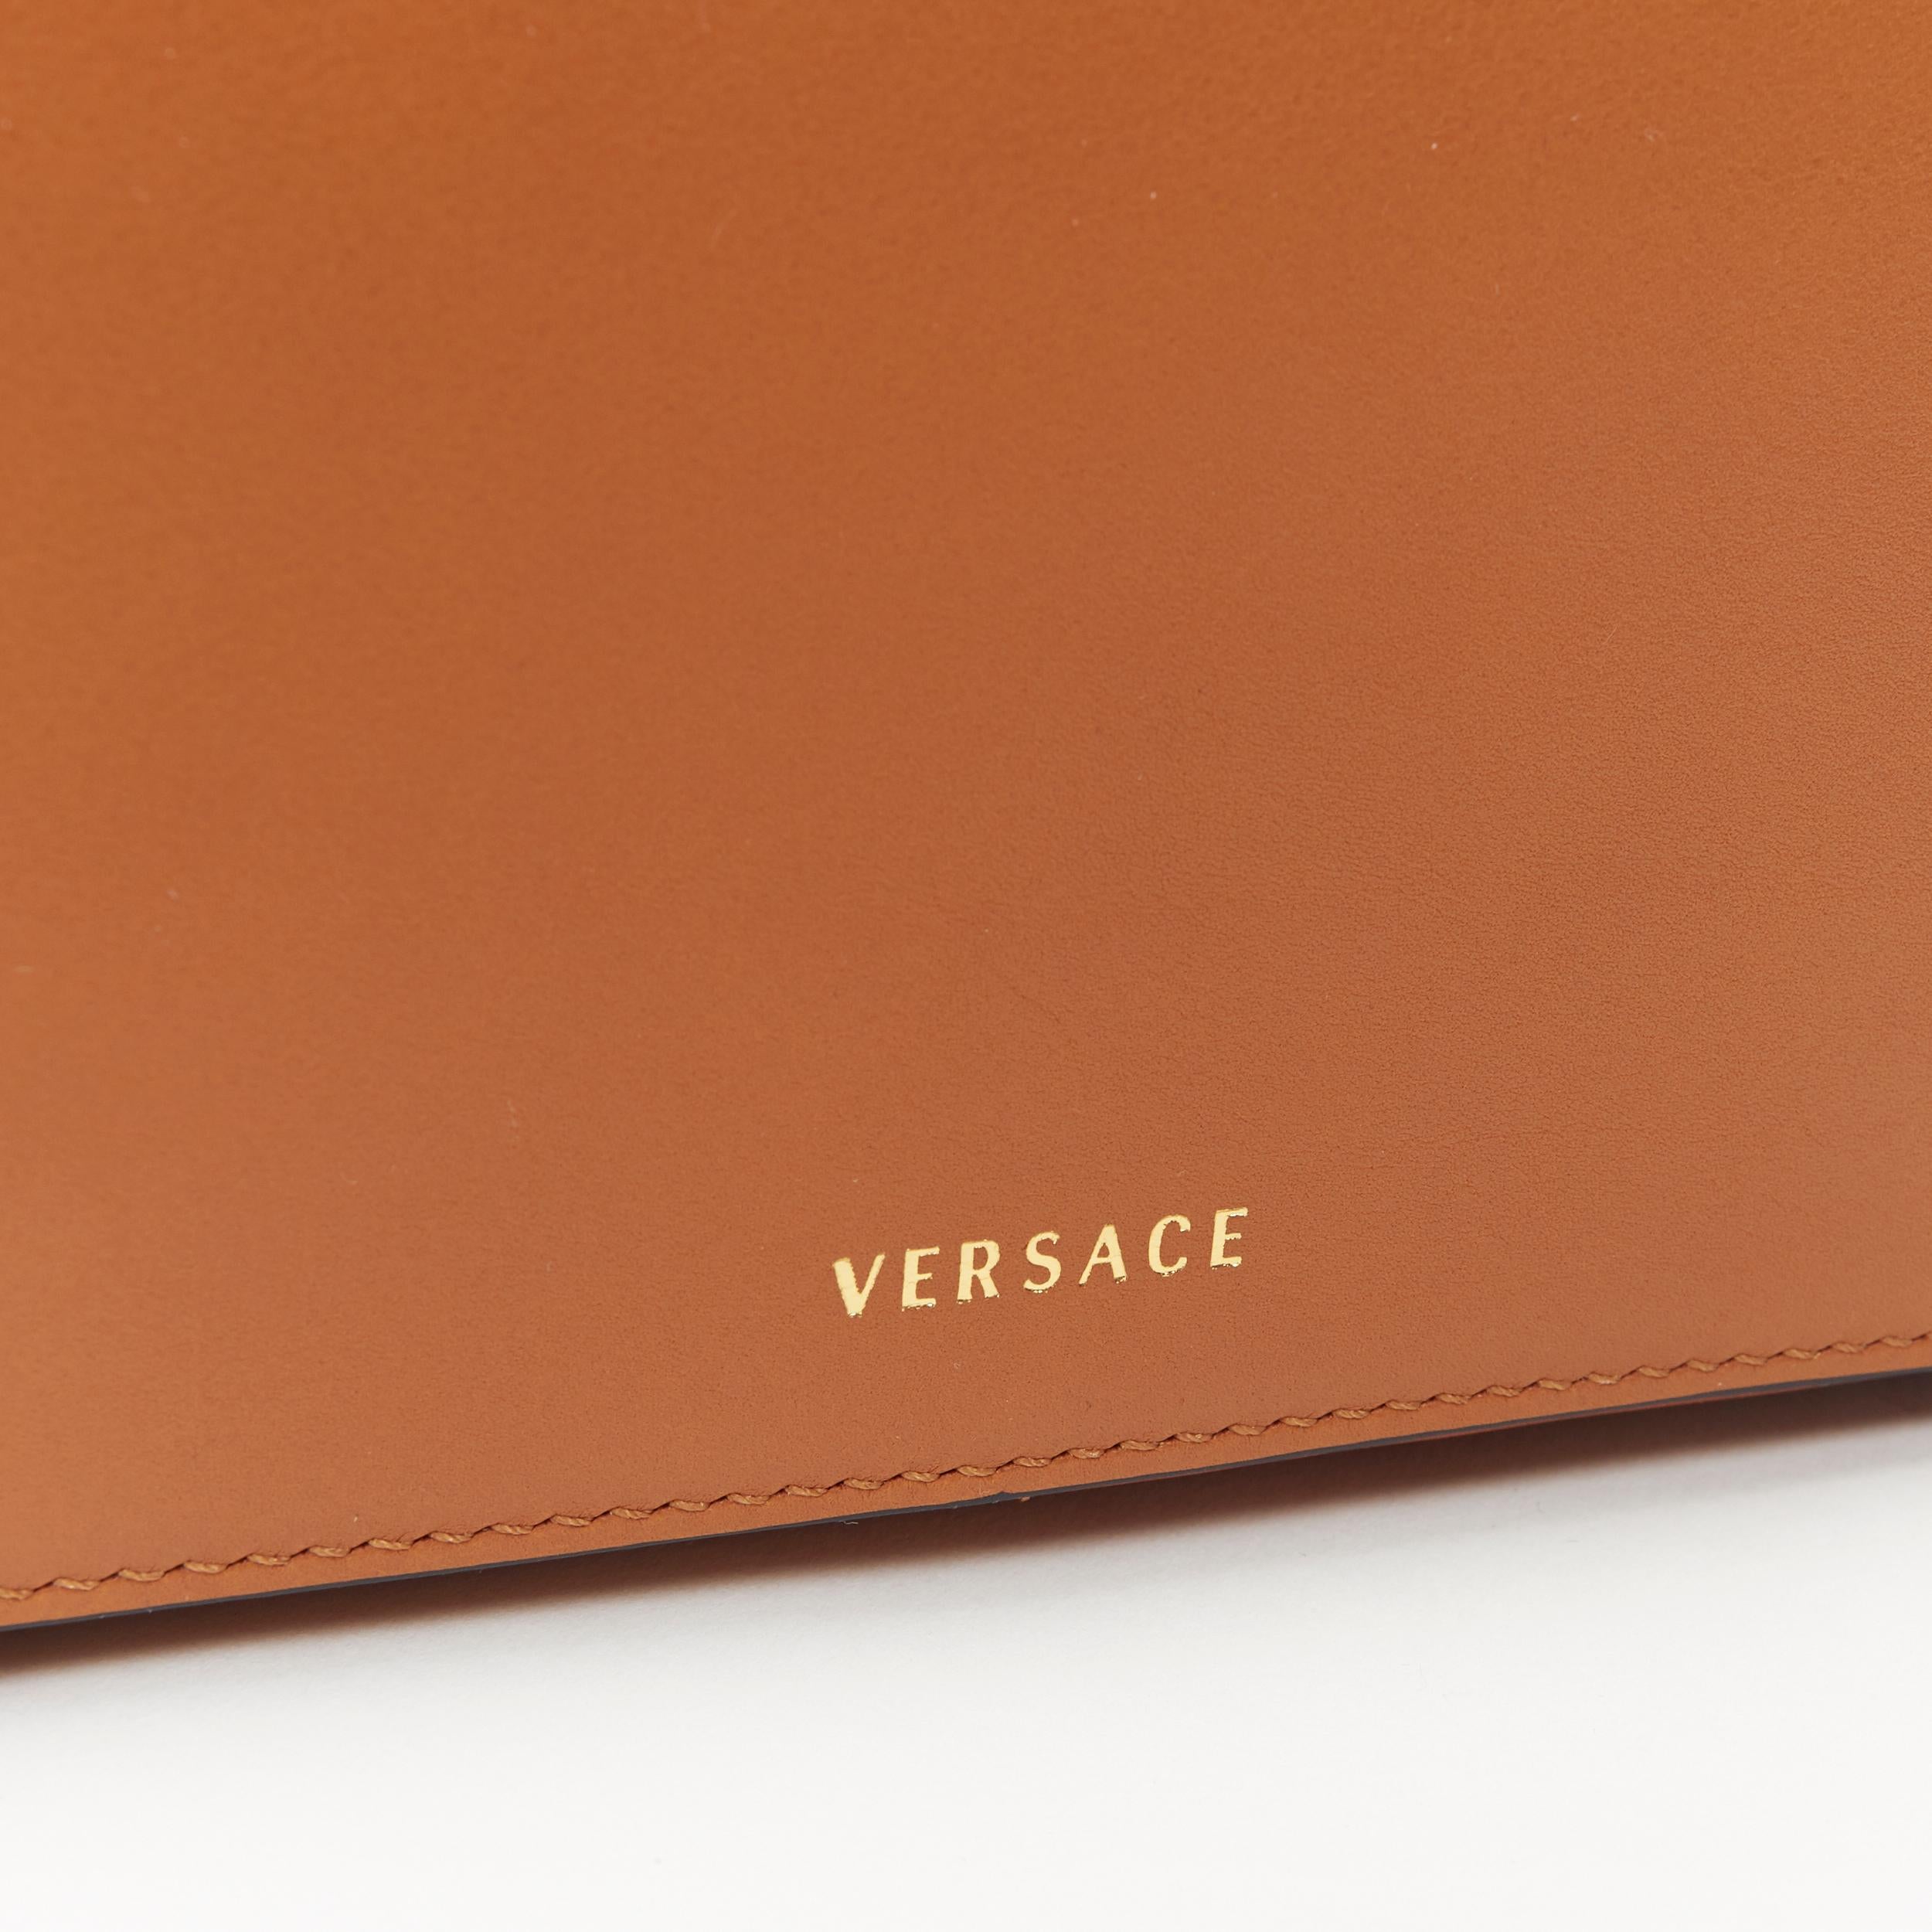 VERSACE Virtus cognac brown leather gold buckle flap top handle satchel bag 1